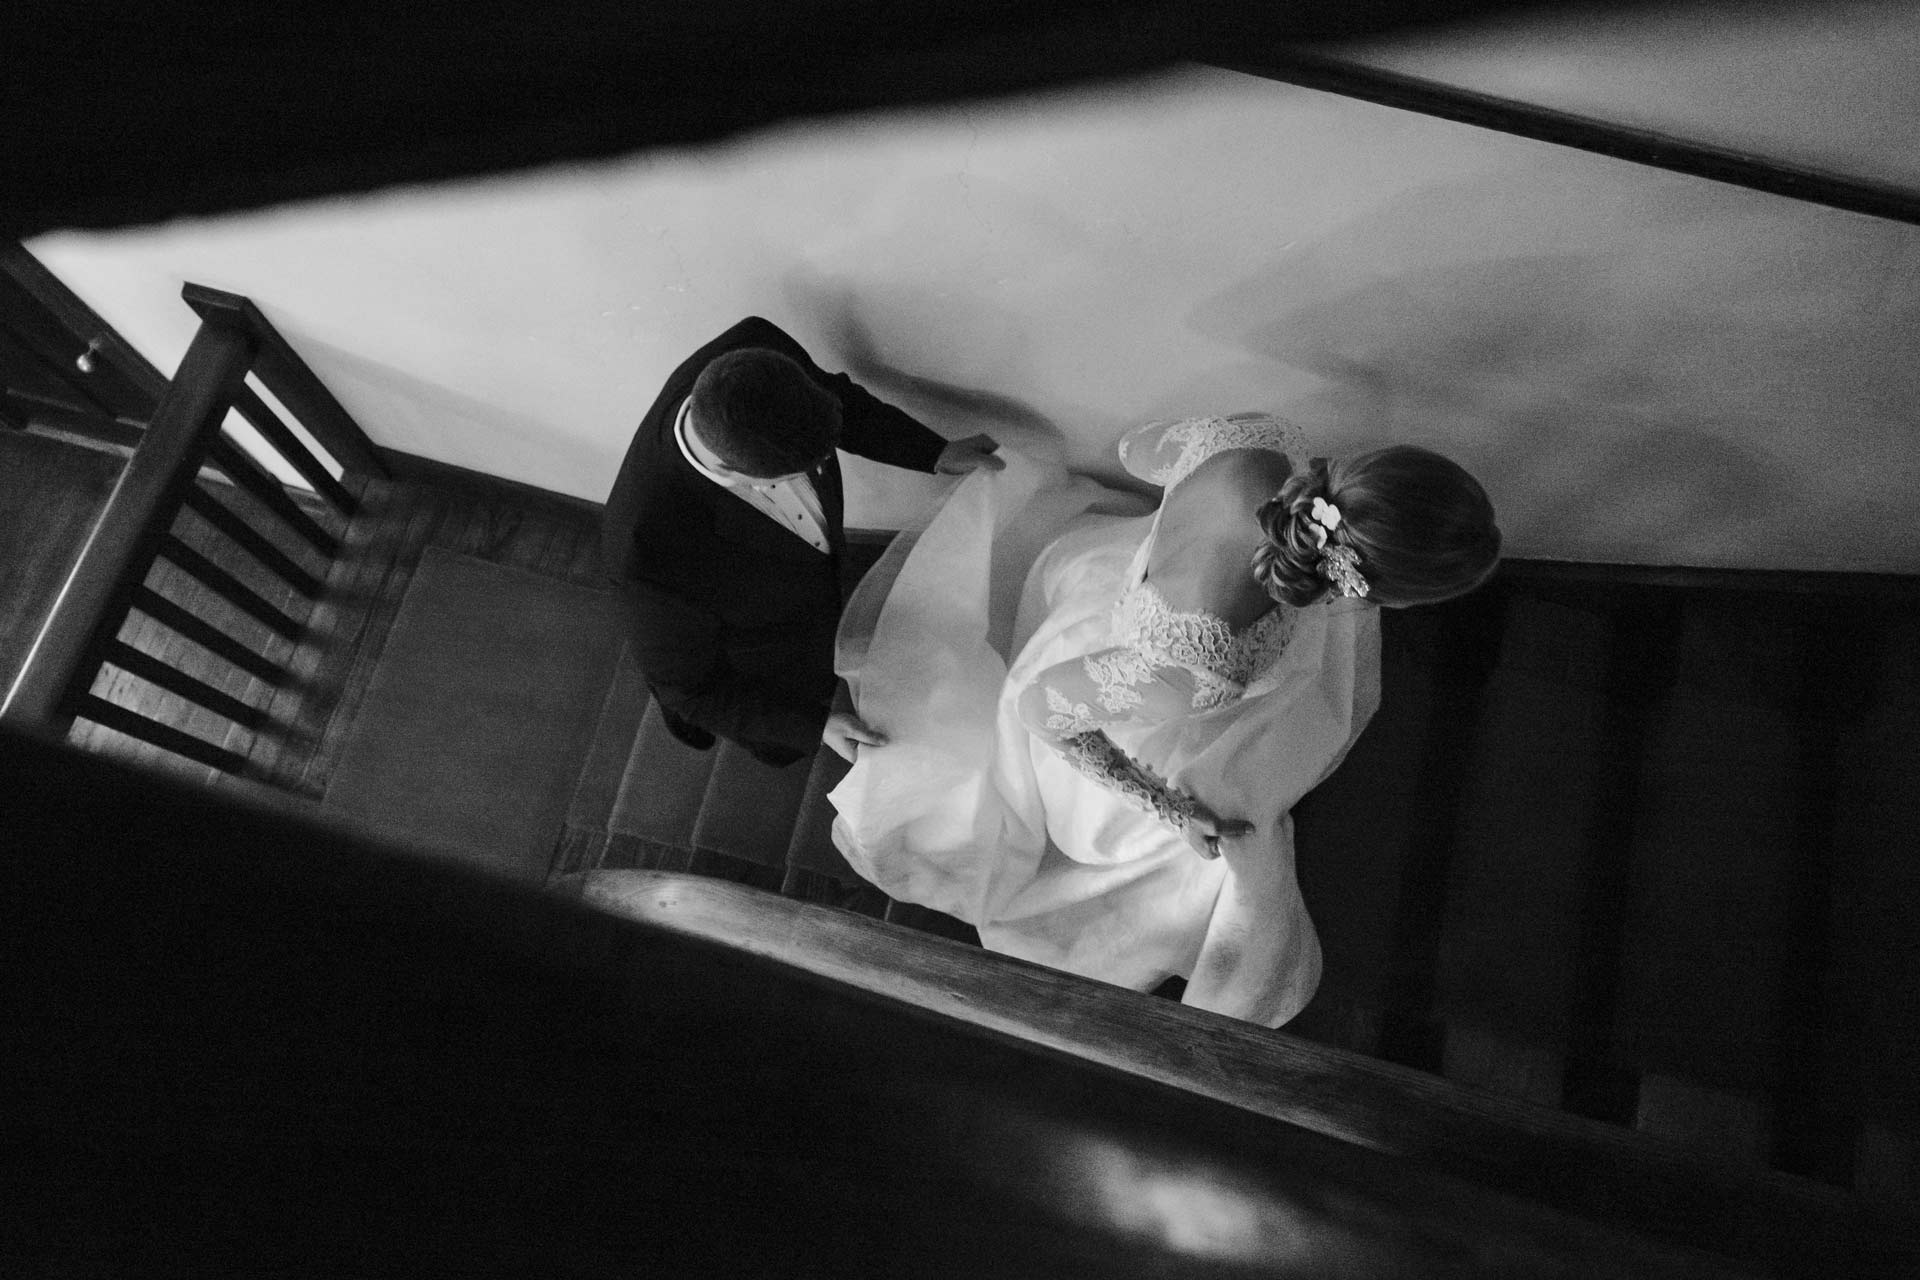 San Antonio wedding photographer Philip Thomas captures wedded couple ascending staircase at Hotel Havana - LM102788 2